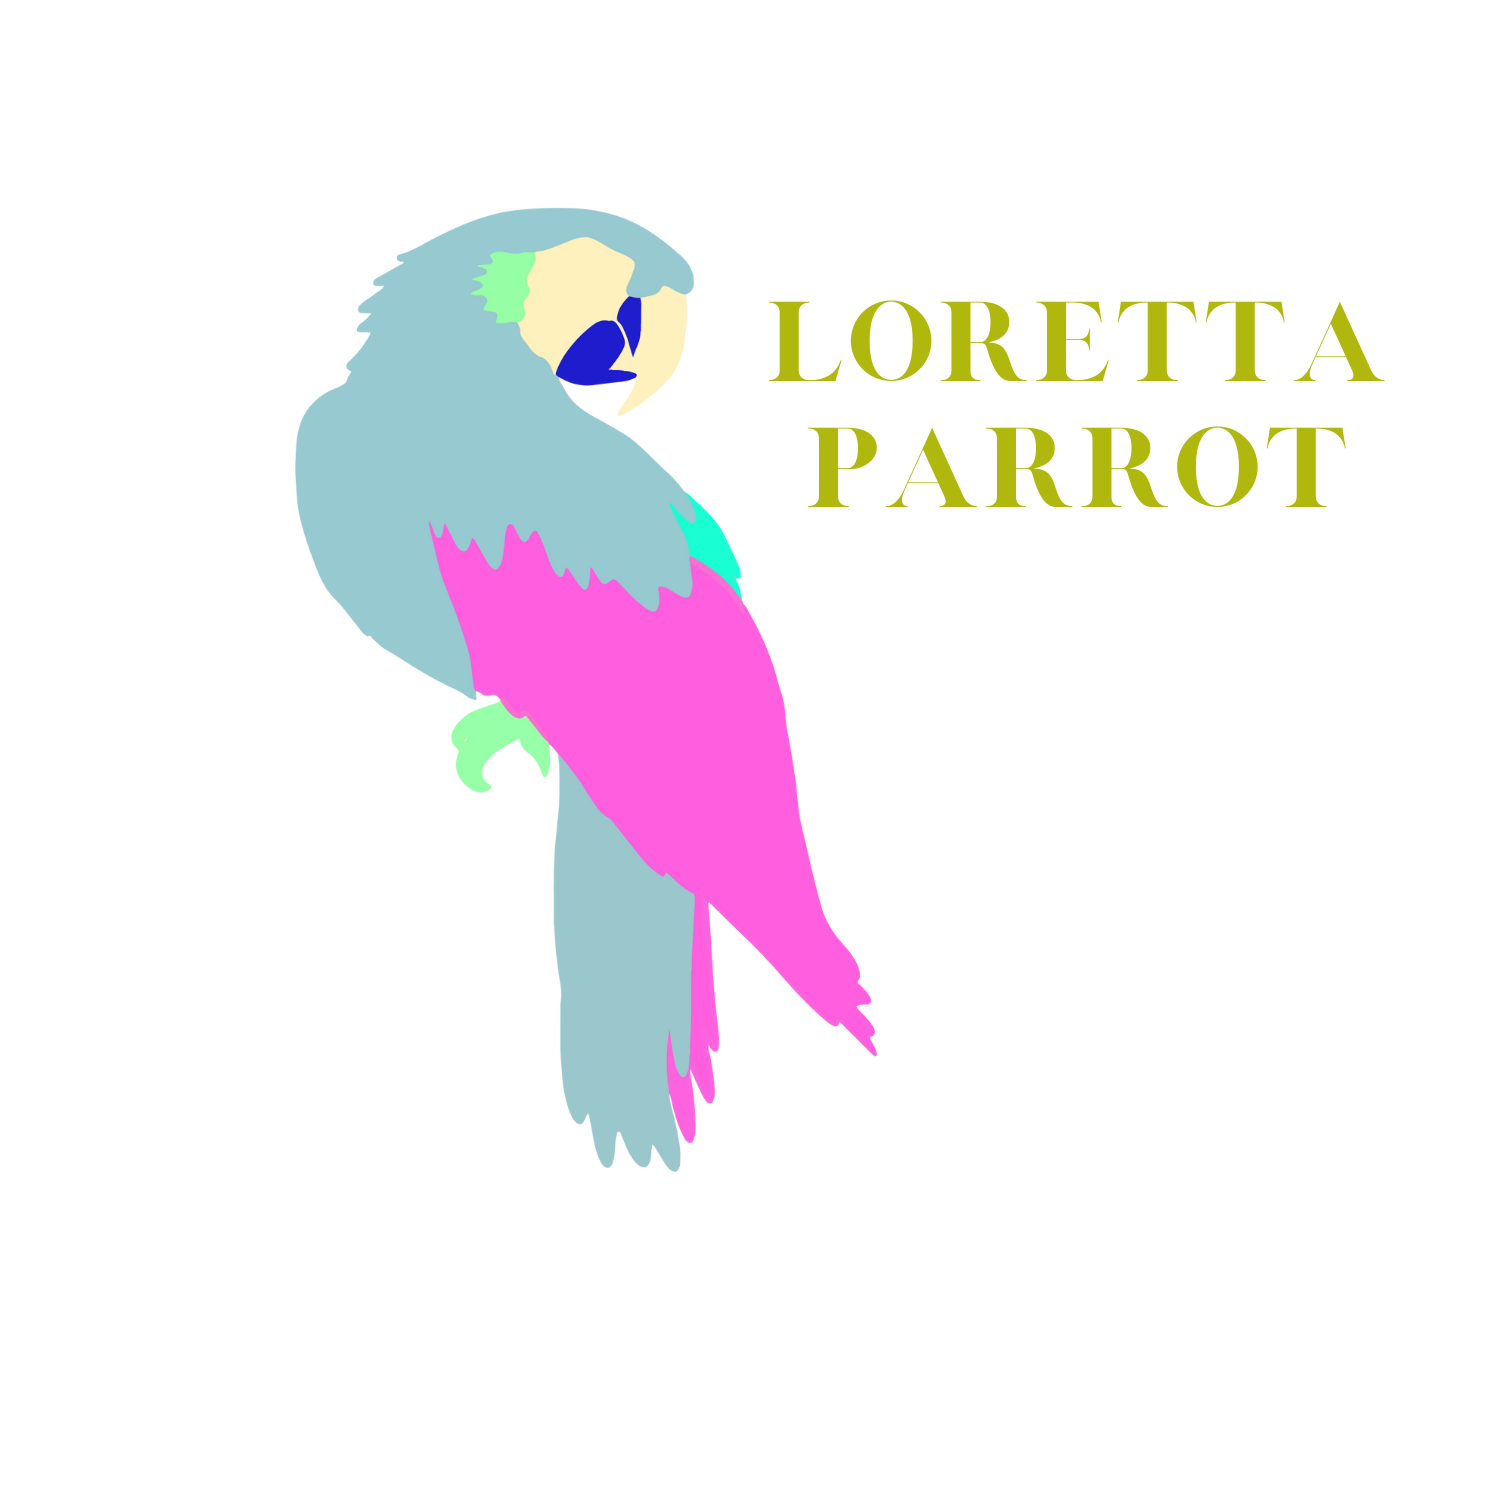 Loretta Parrot